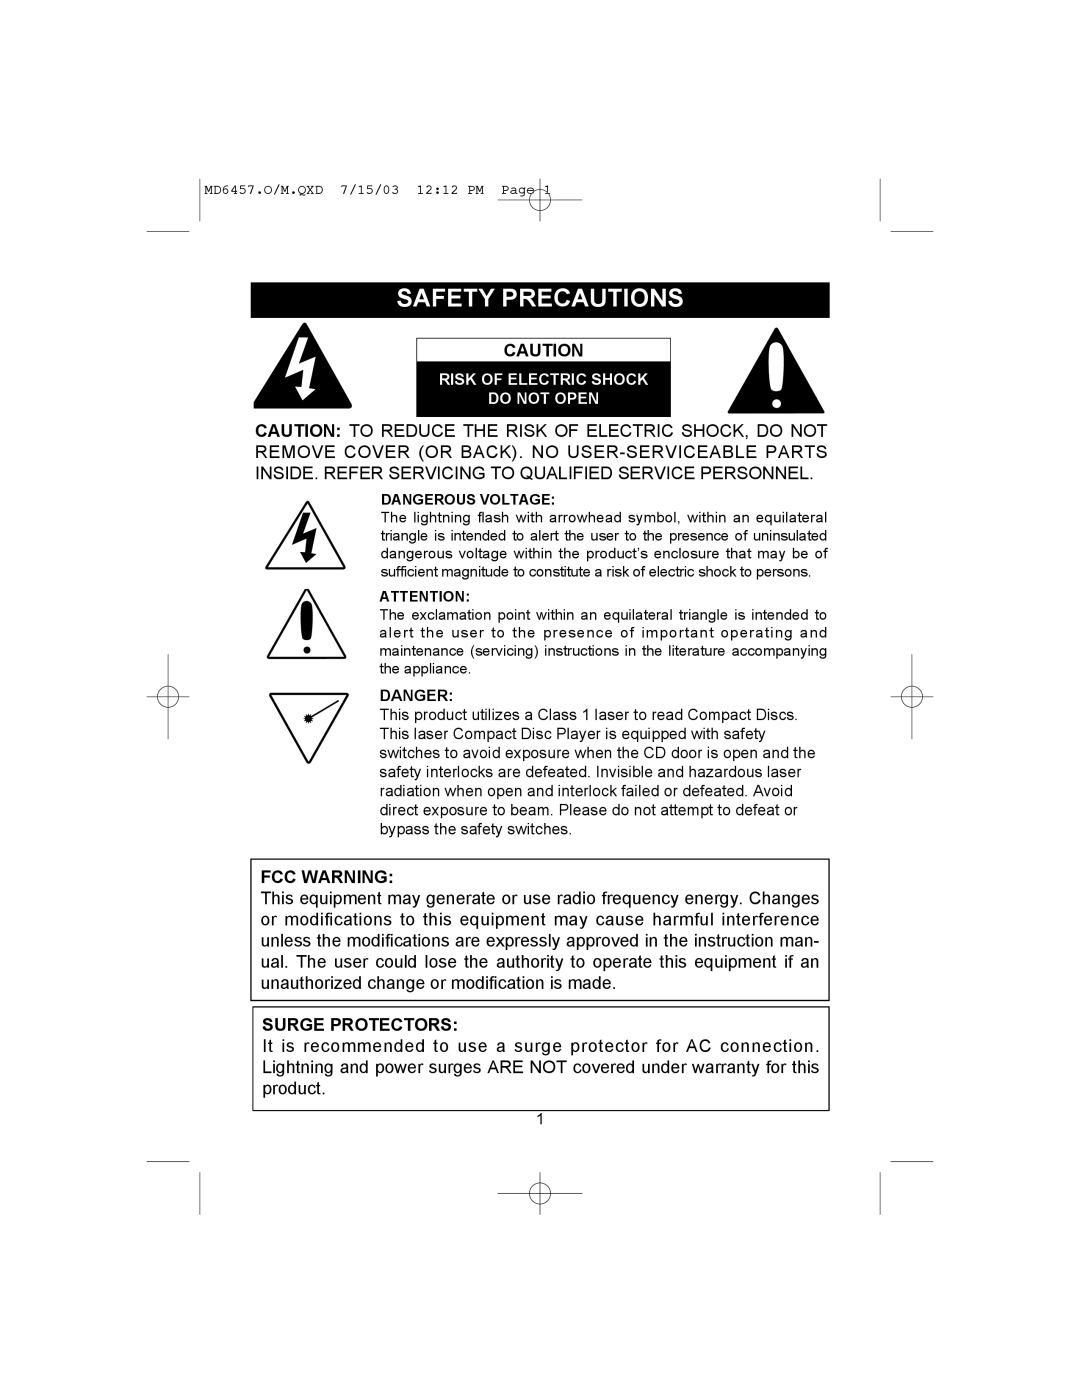 Memorex MD6457CP manual Safety Precautions, Fcc Warning, Surge Protectors 